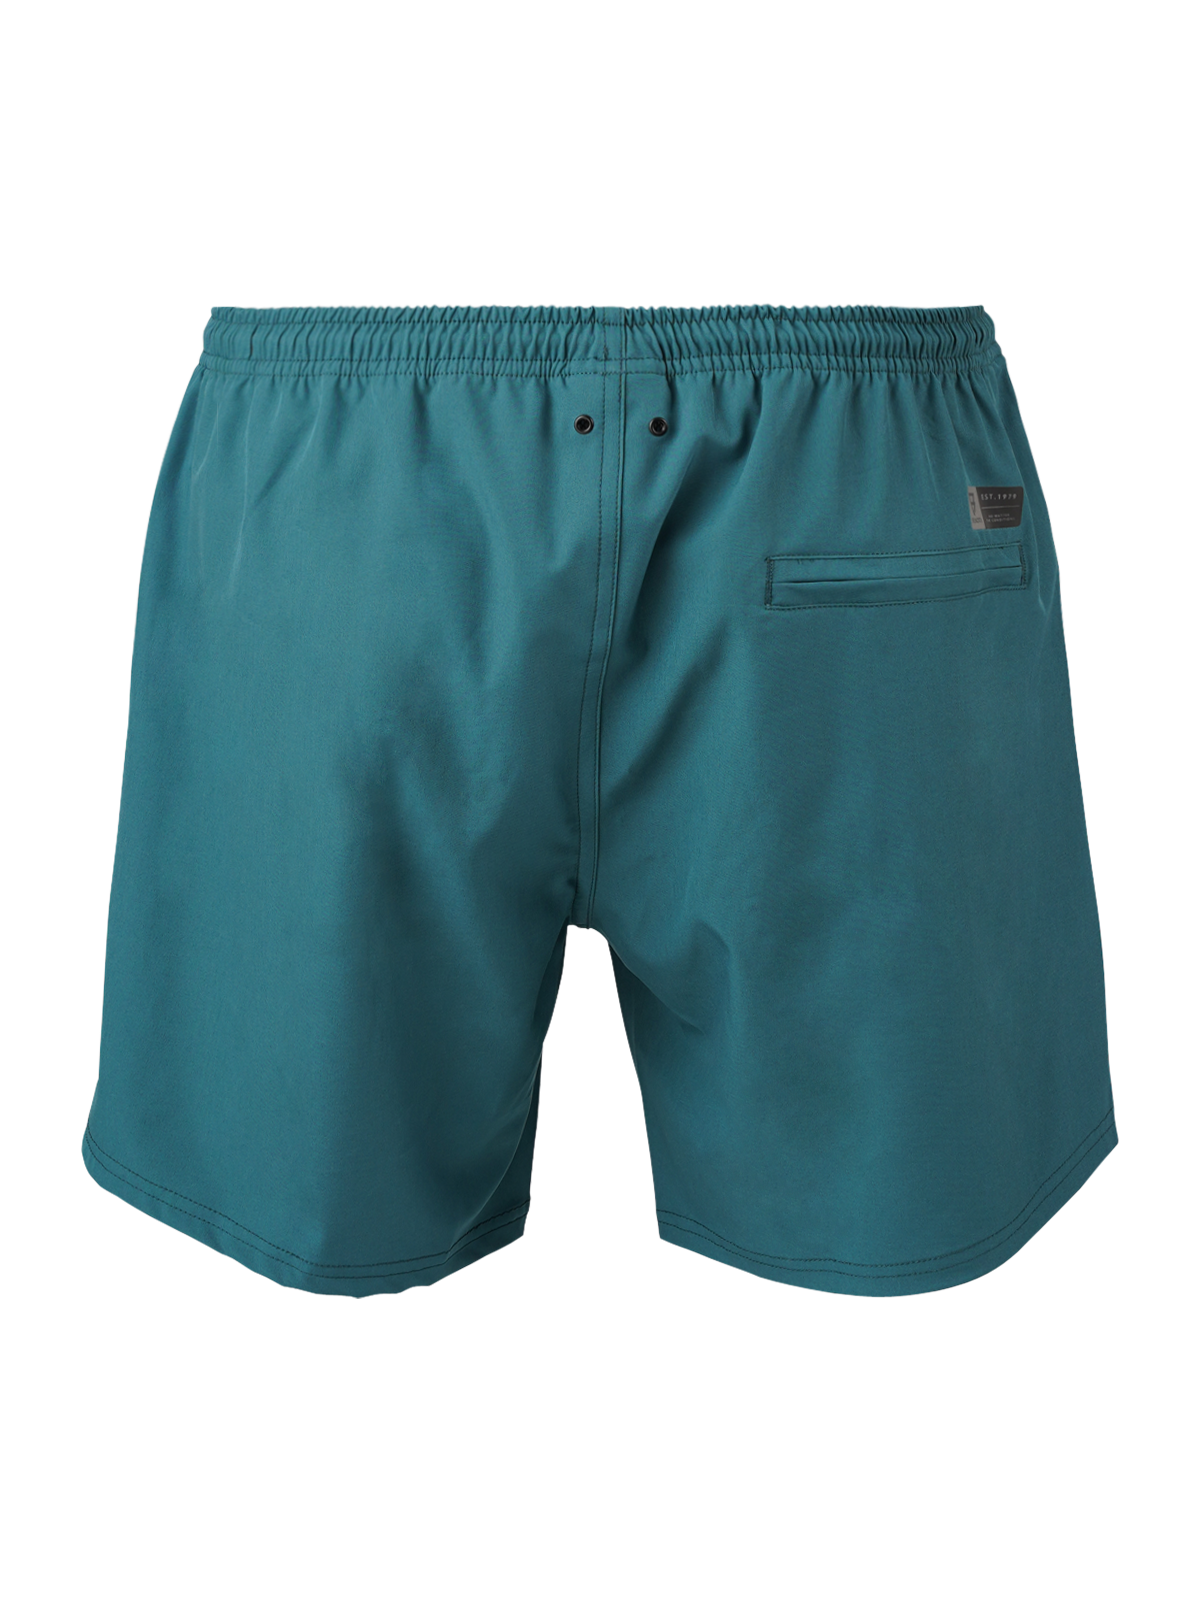 Lestero Men Swim Shorts | Green